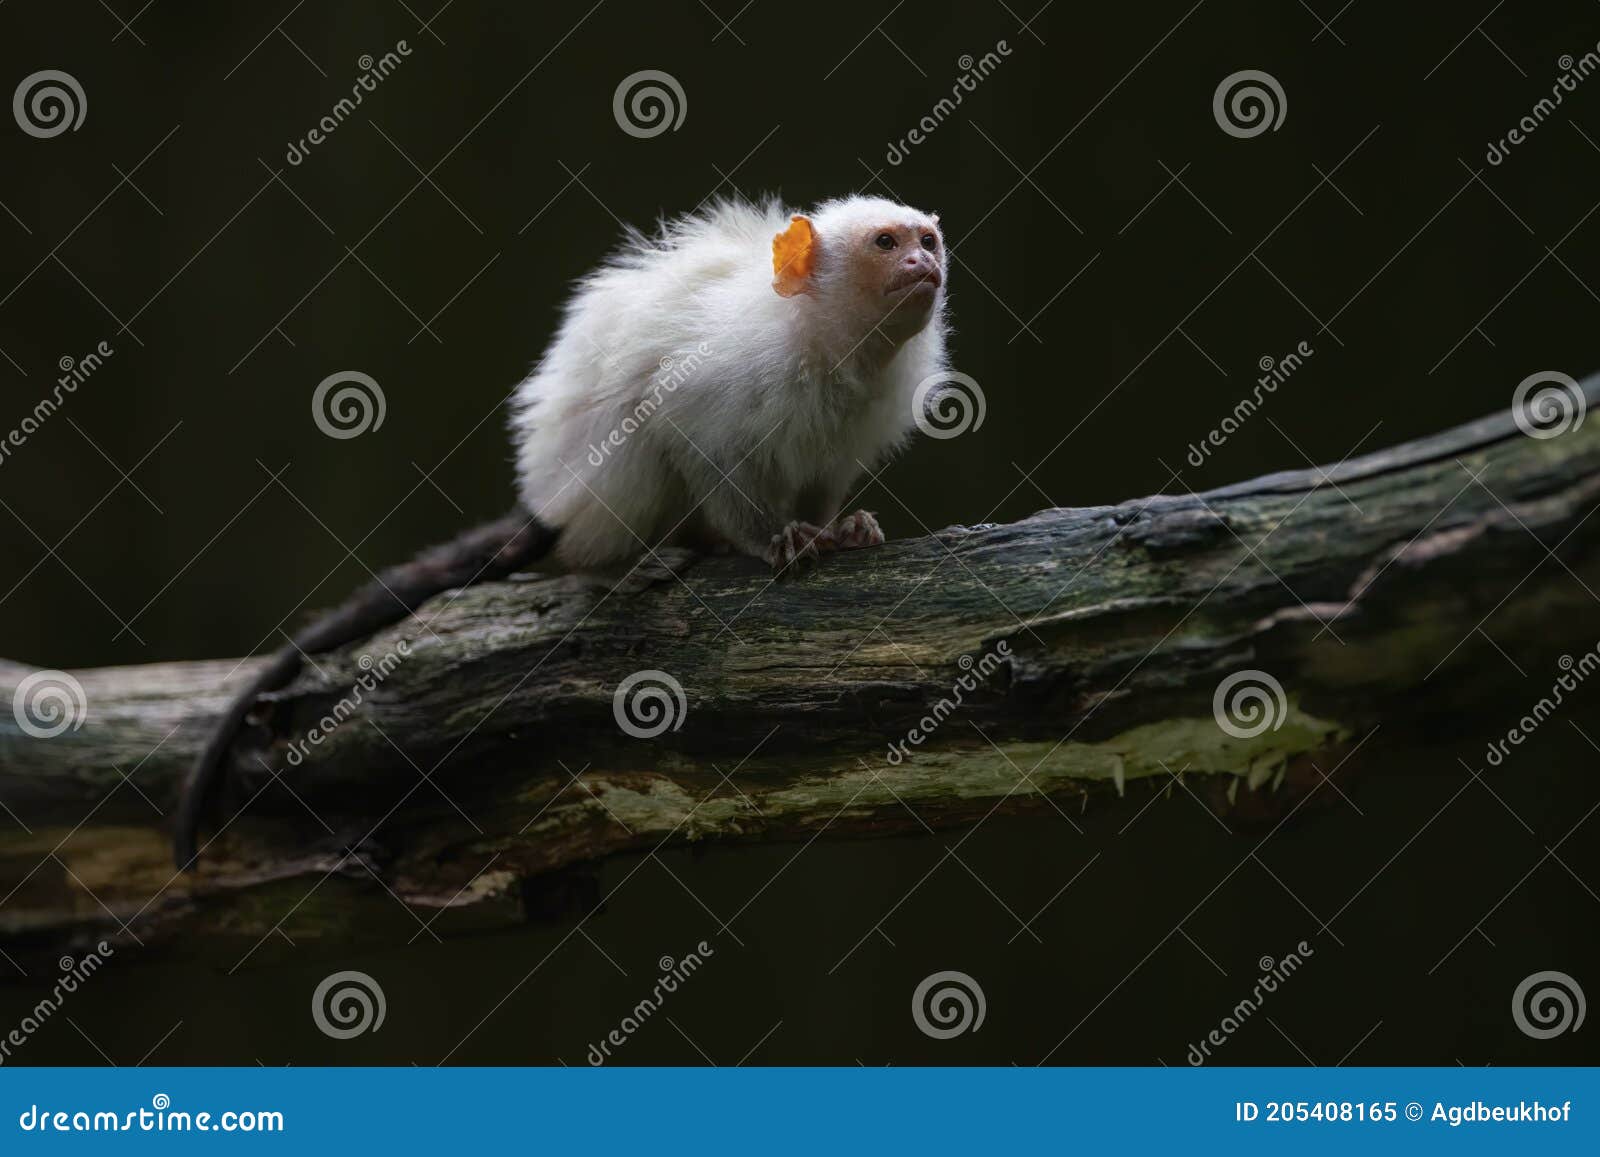 silvery marmoset mico argentatus on a branch. dark background.